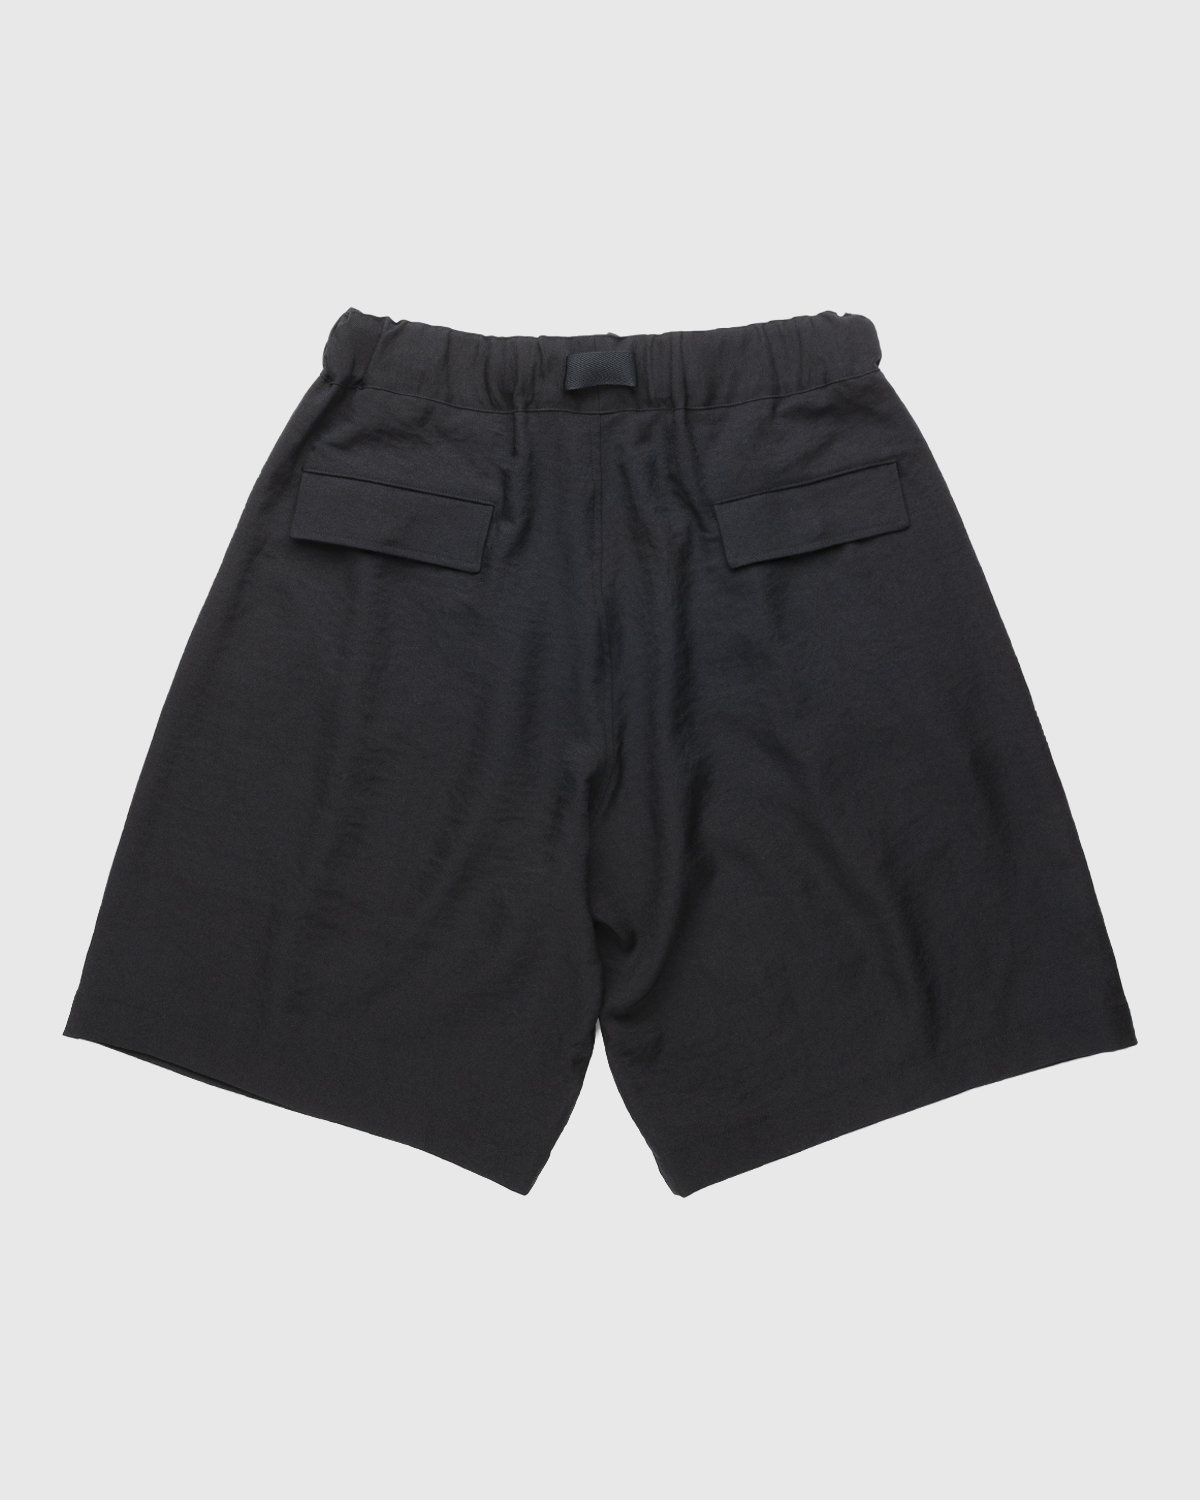 Y-3 – Classic Sport Uniform Shorts Black - Shorts - Black - Image 2